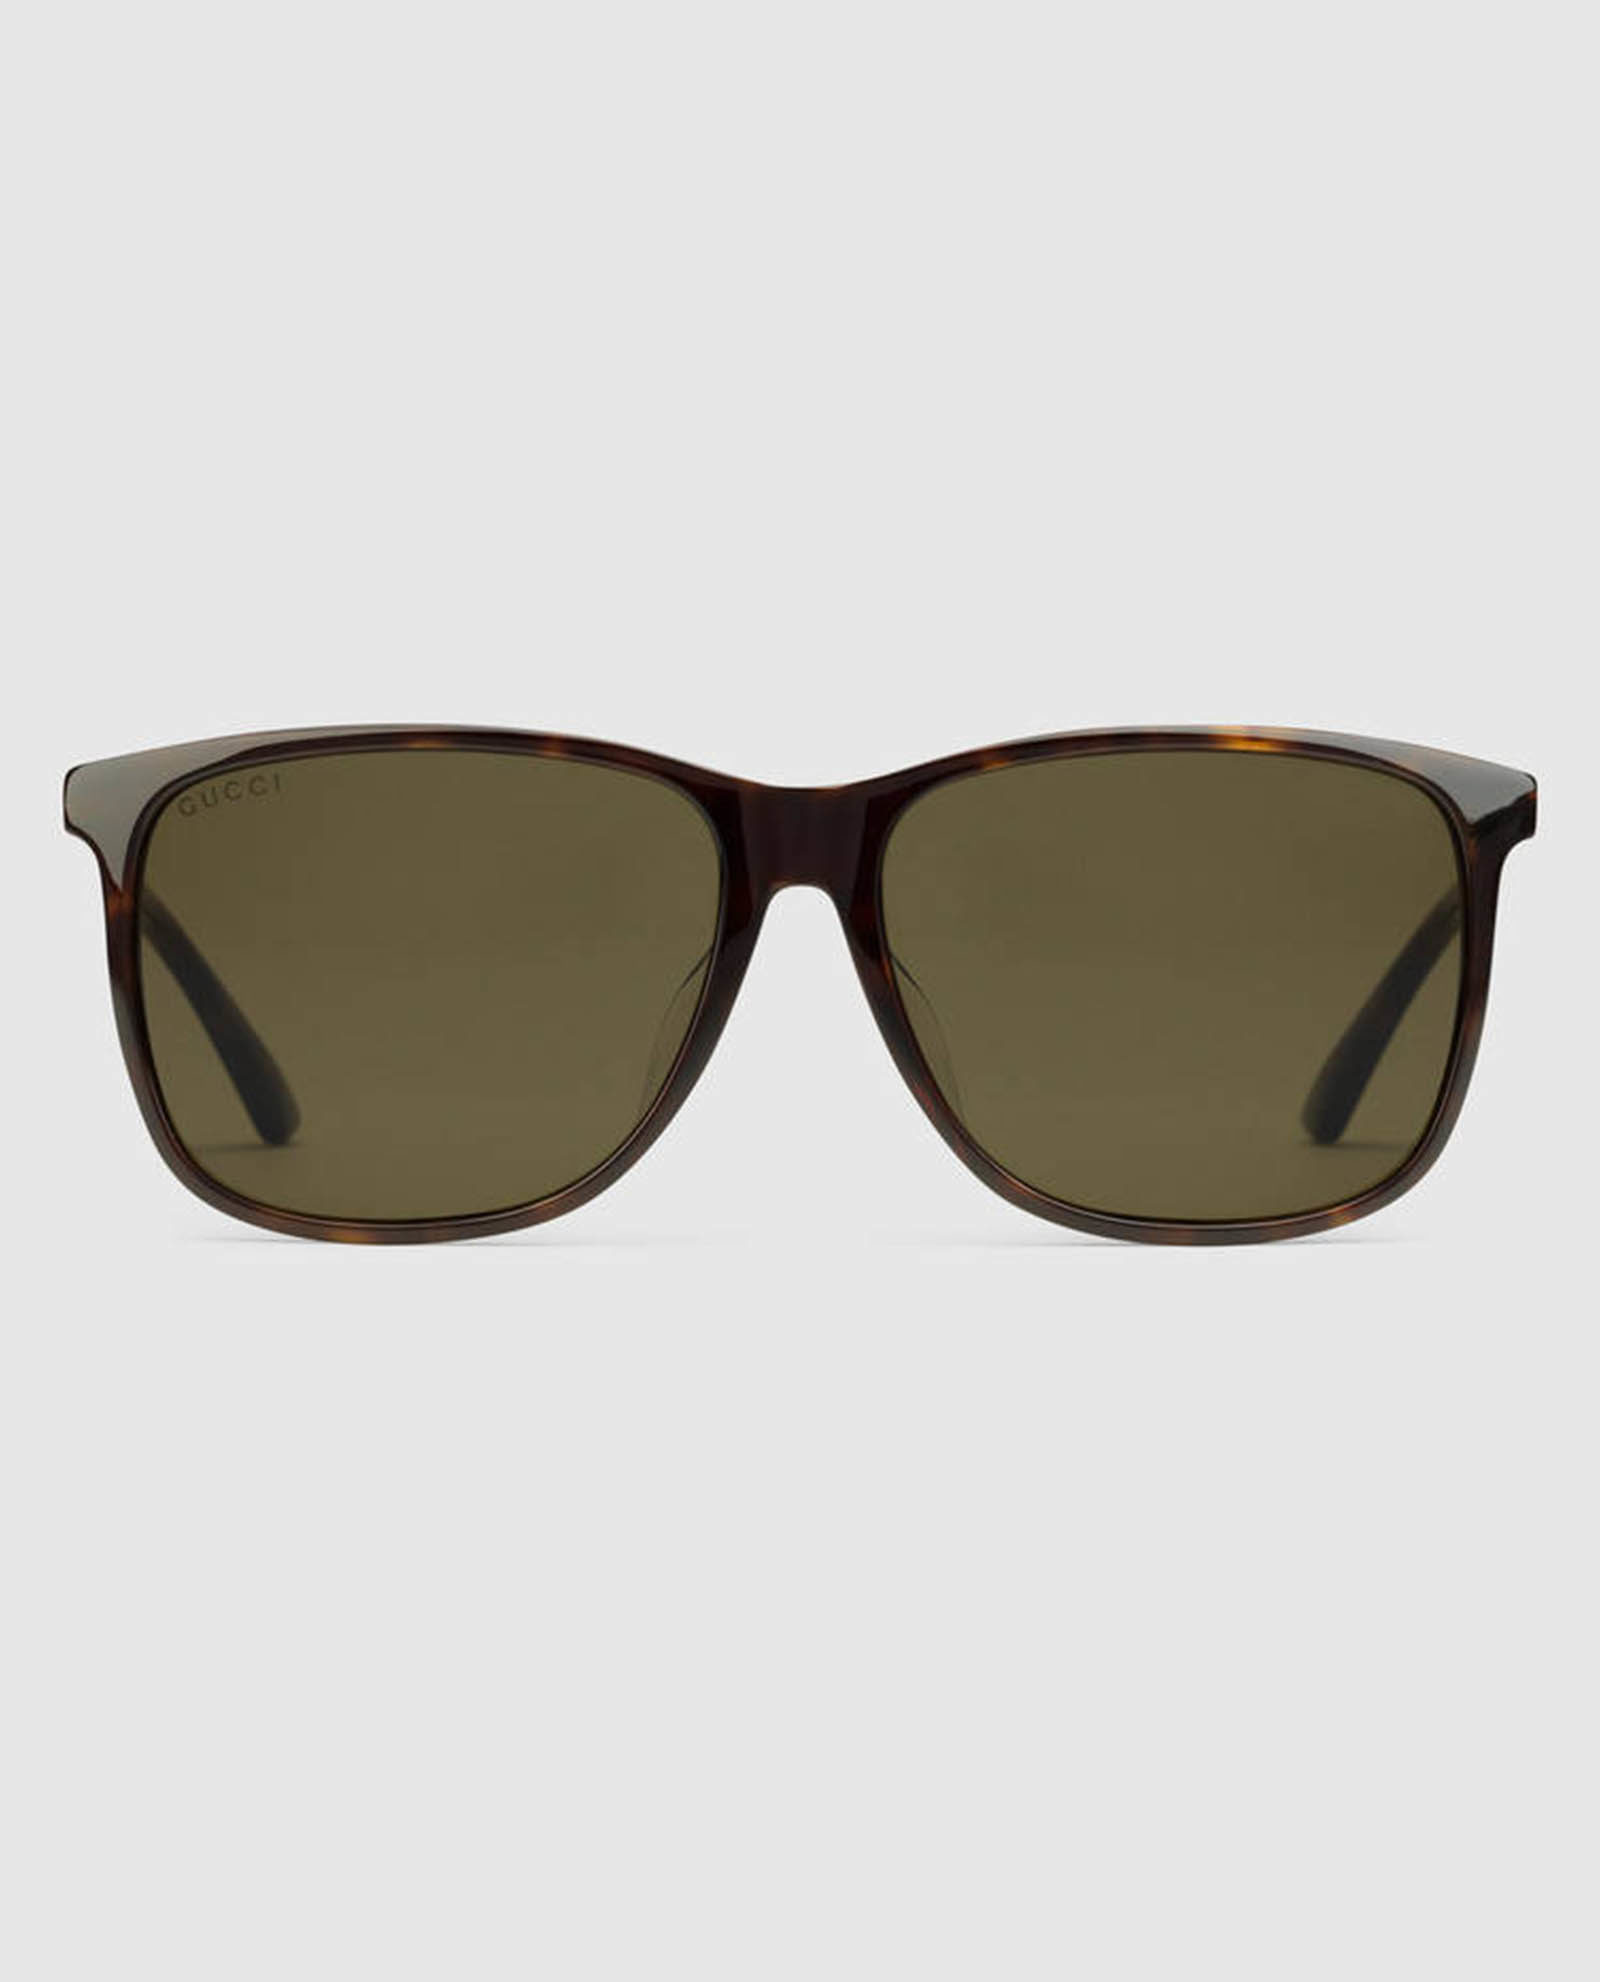 461670_J0742_2620_001_100_0000_Light-Specialized-fit-rectangular-frame-acetate-sunglasses-gucci-man